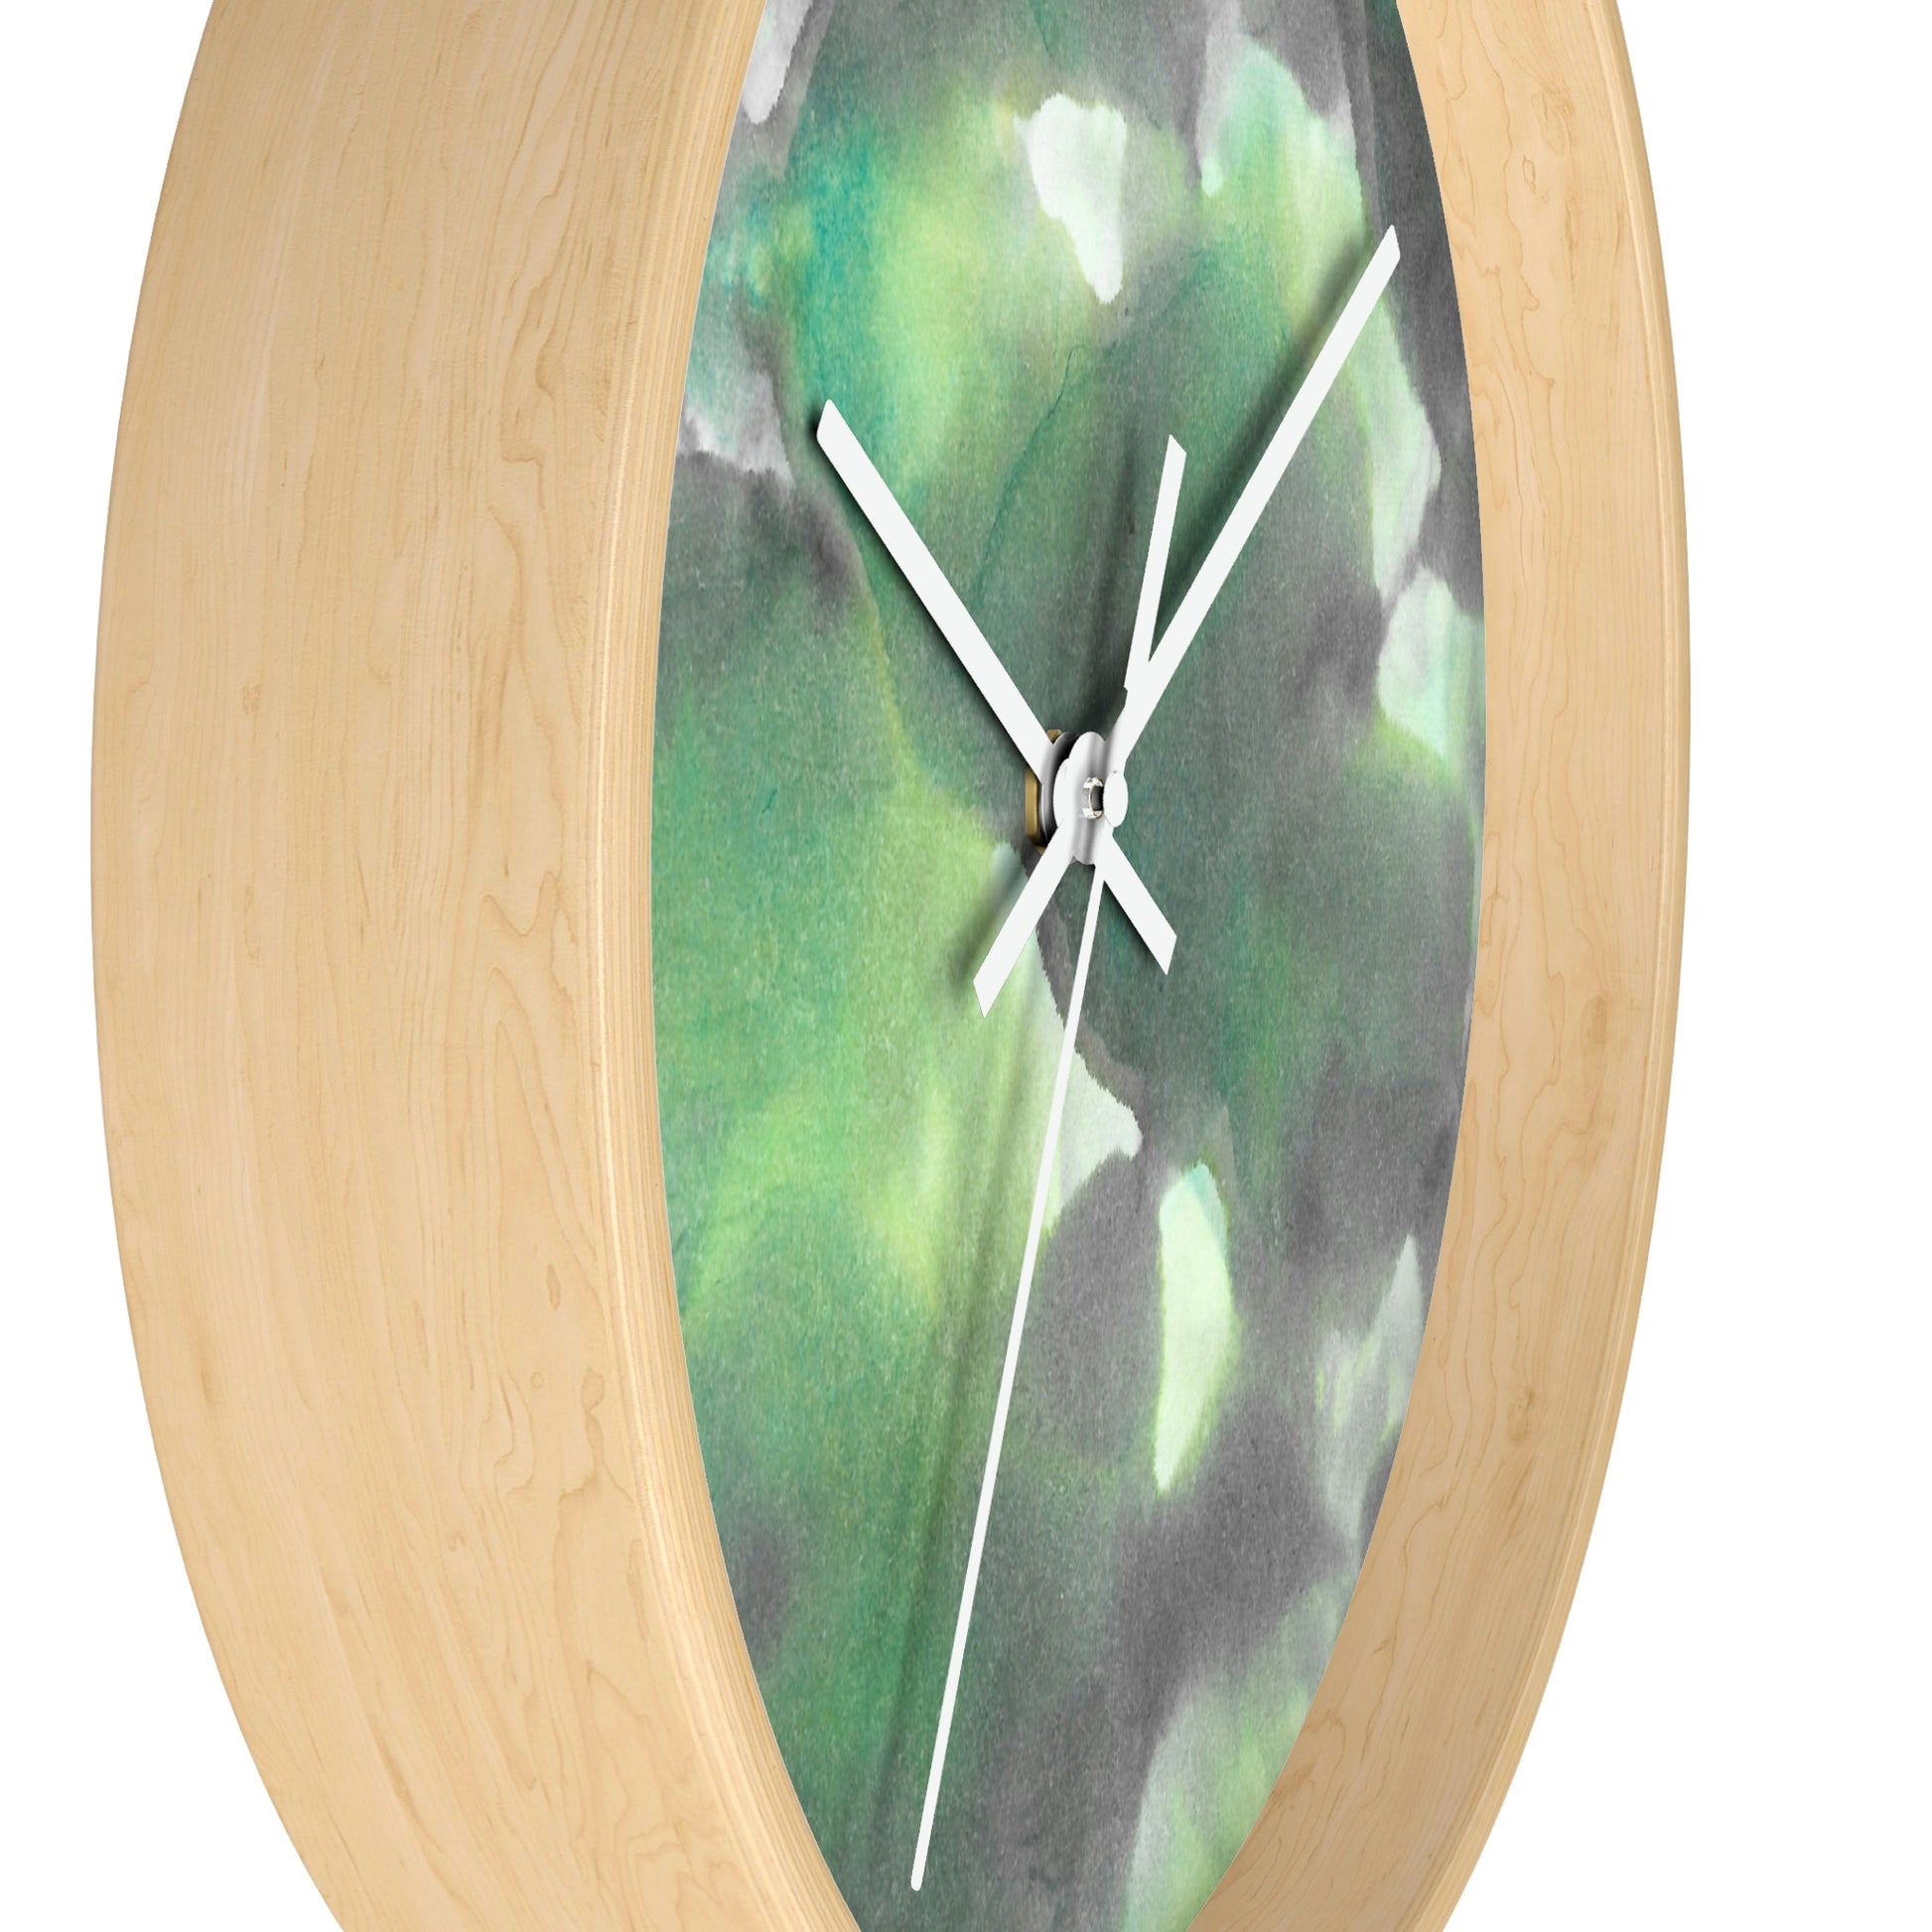 Crystal Ivy Wall clock - Alja Design